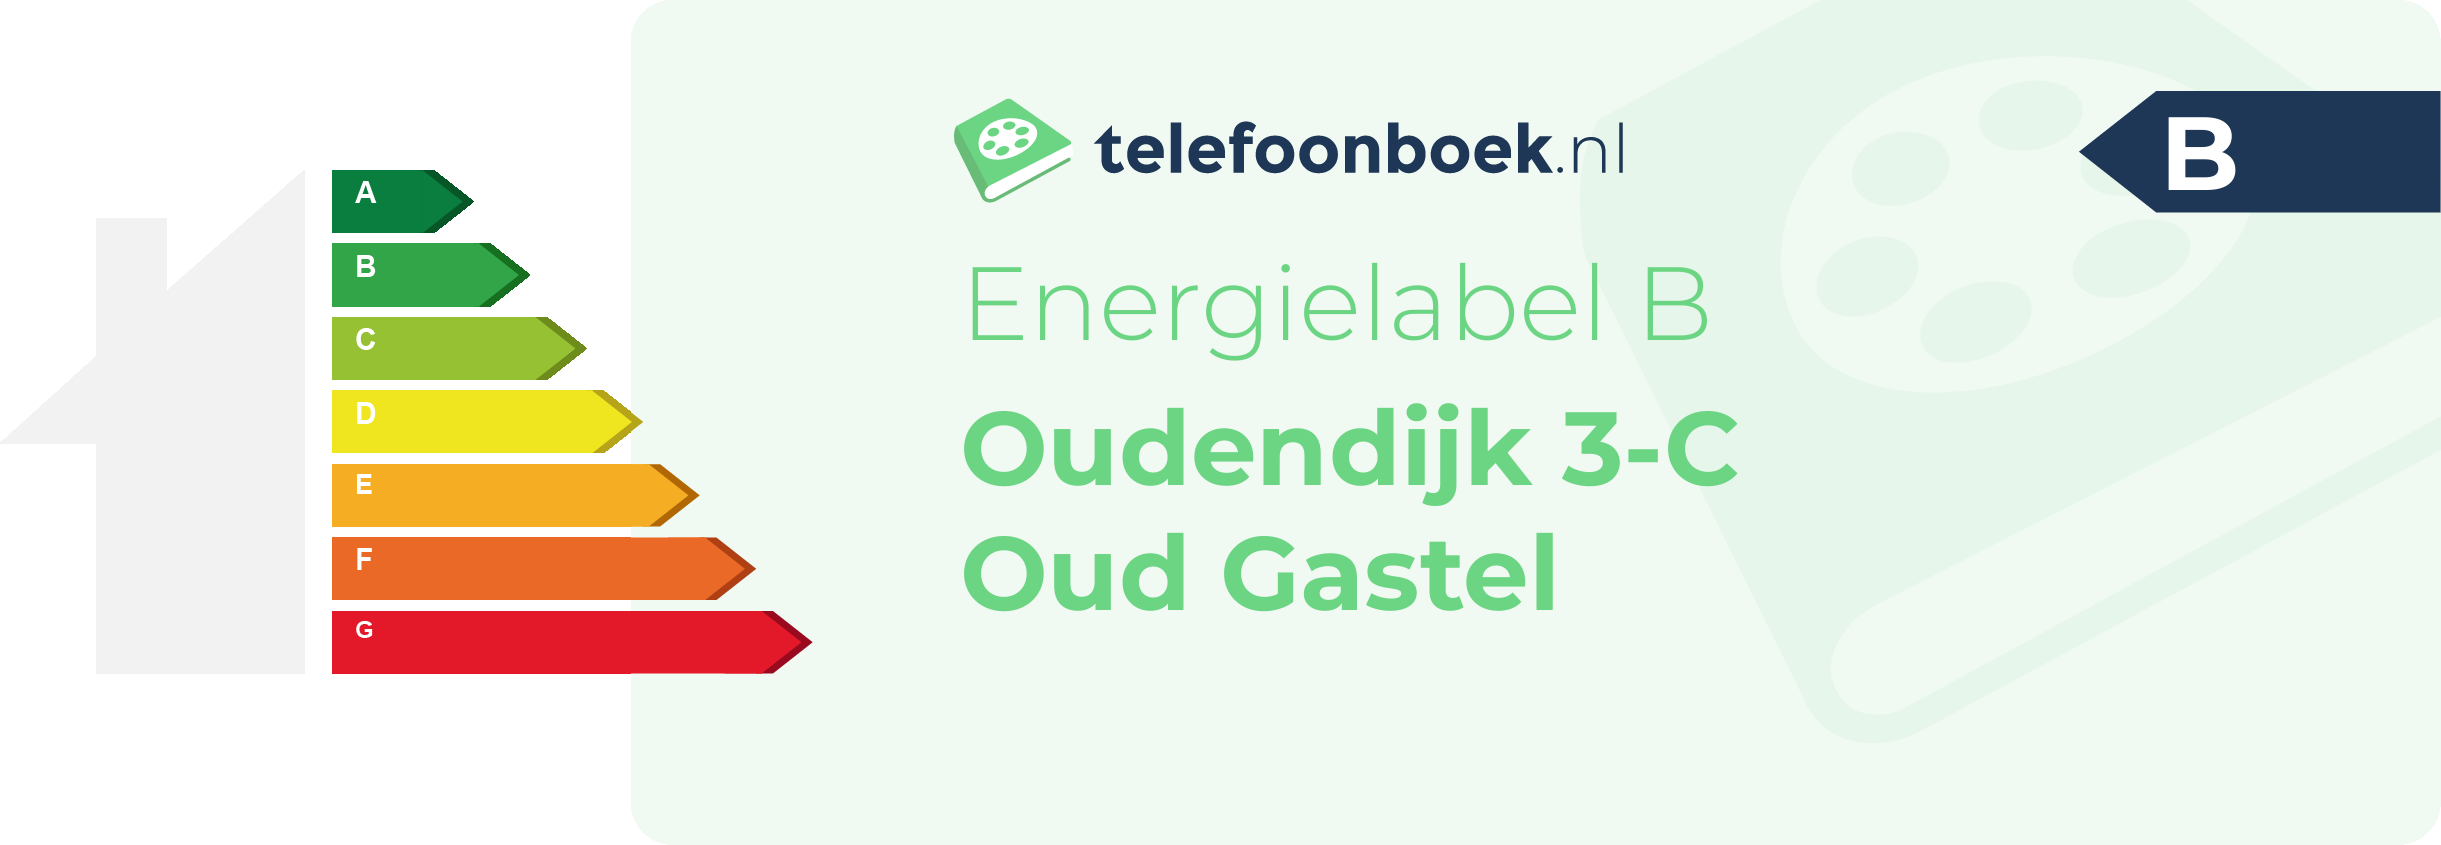 Energielabel Oudendijk 3-C Oud Gastel